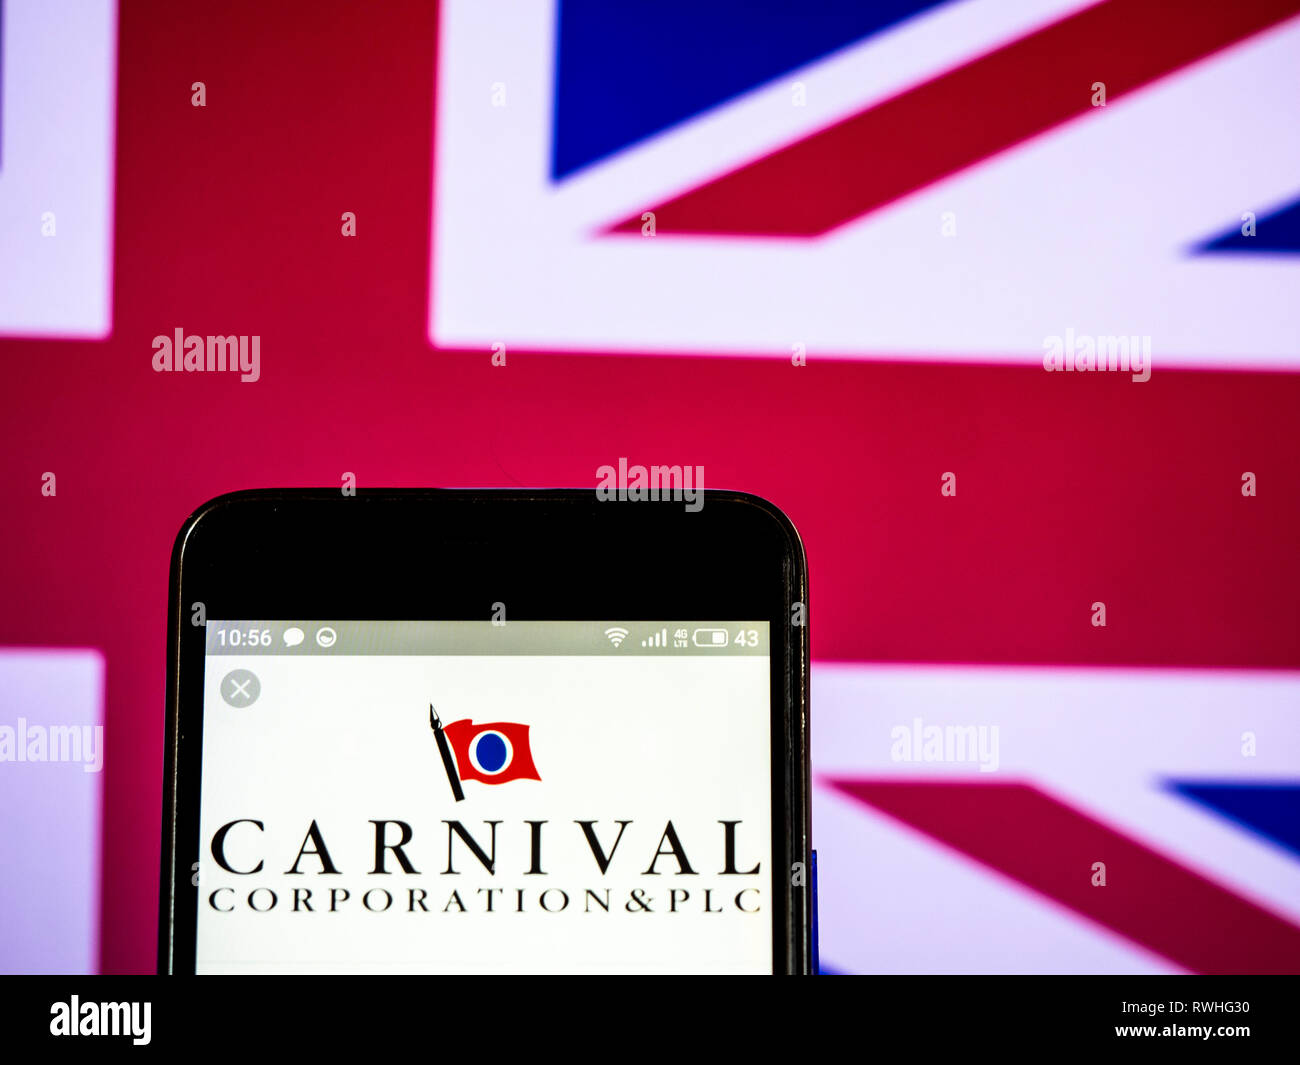 Carnival Corporation & plc logo seen displayed on smart phone. Stock Photo